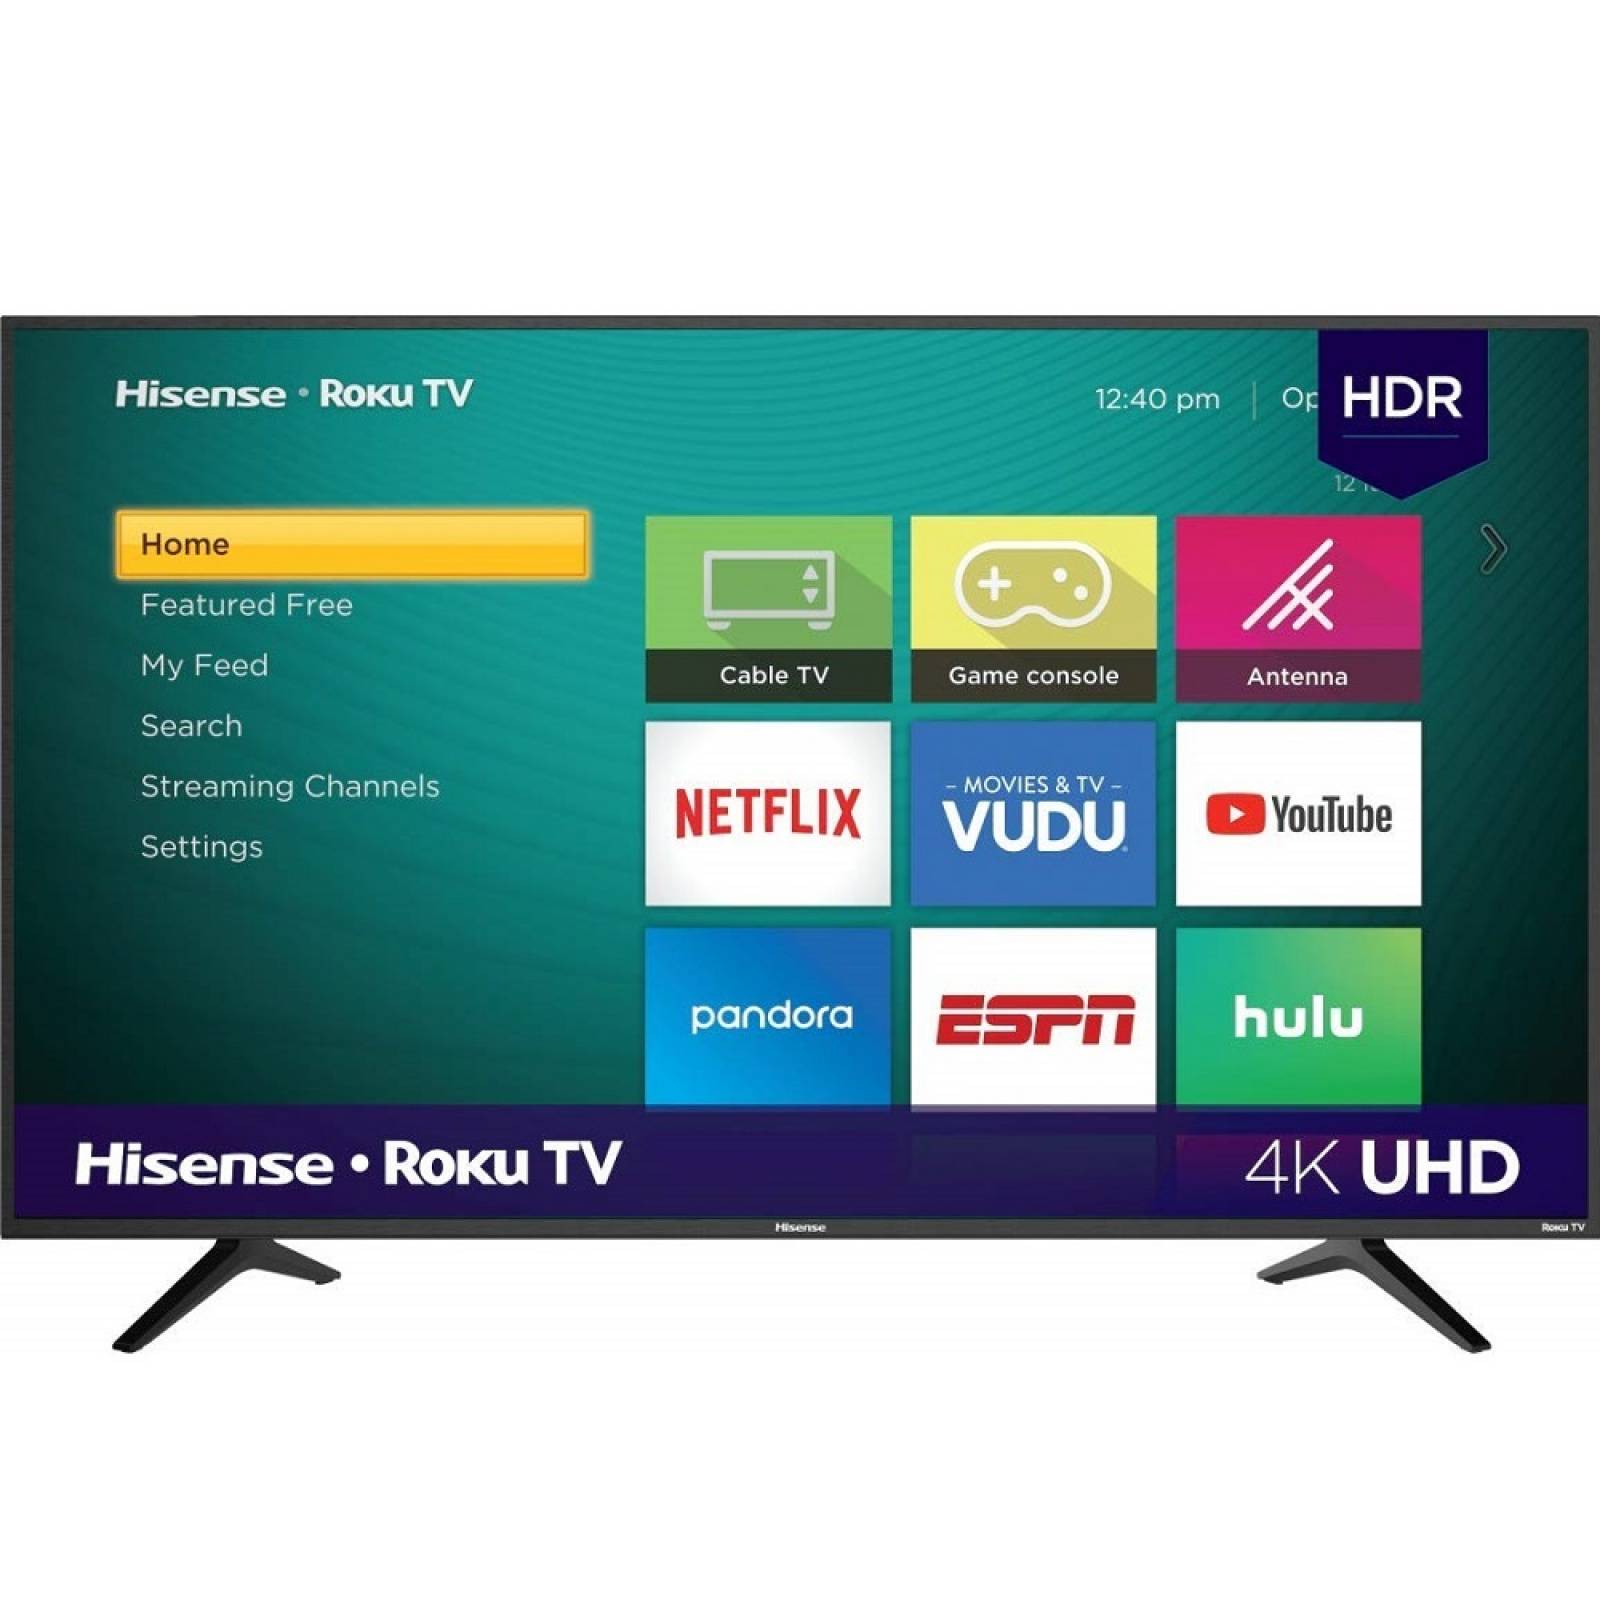 Smart TV 65 Hisense Motion rate 120 Full HD HDR 65R6000FM